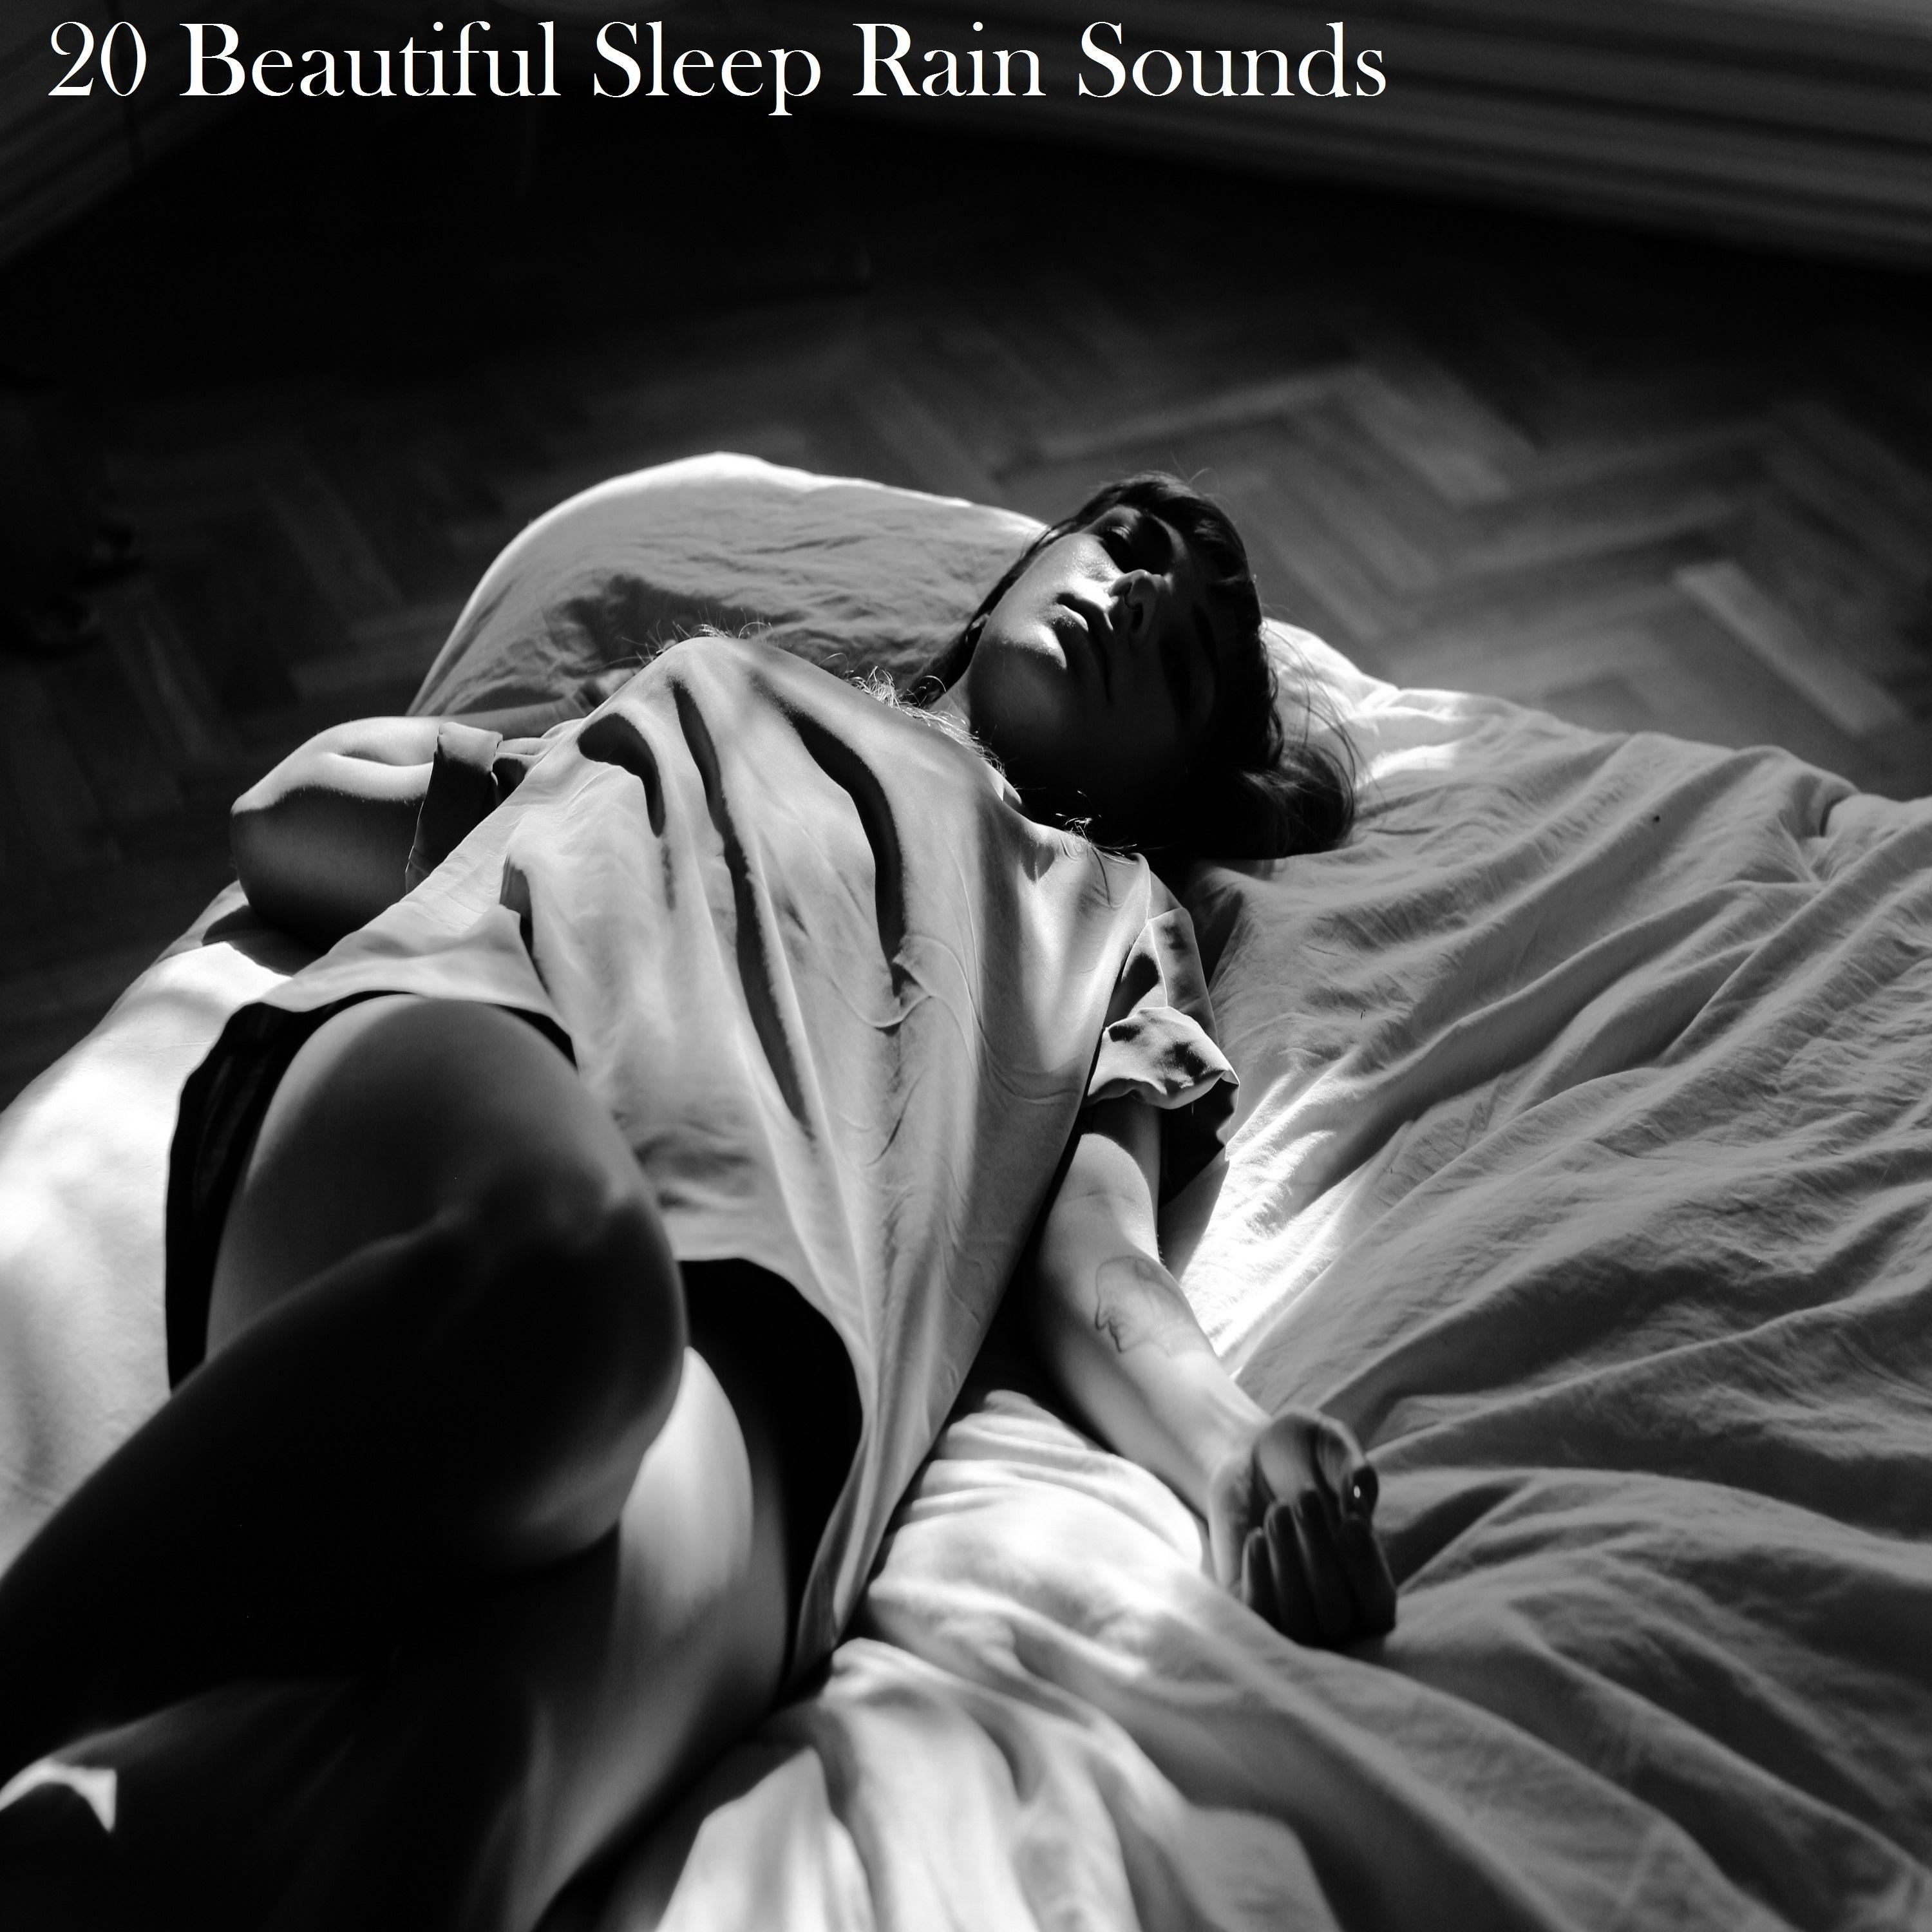 20 Beautiful Sleep Rain Sounds - Natural, Peaceful & Relaxing for a Great Nights Sleep